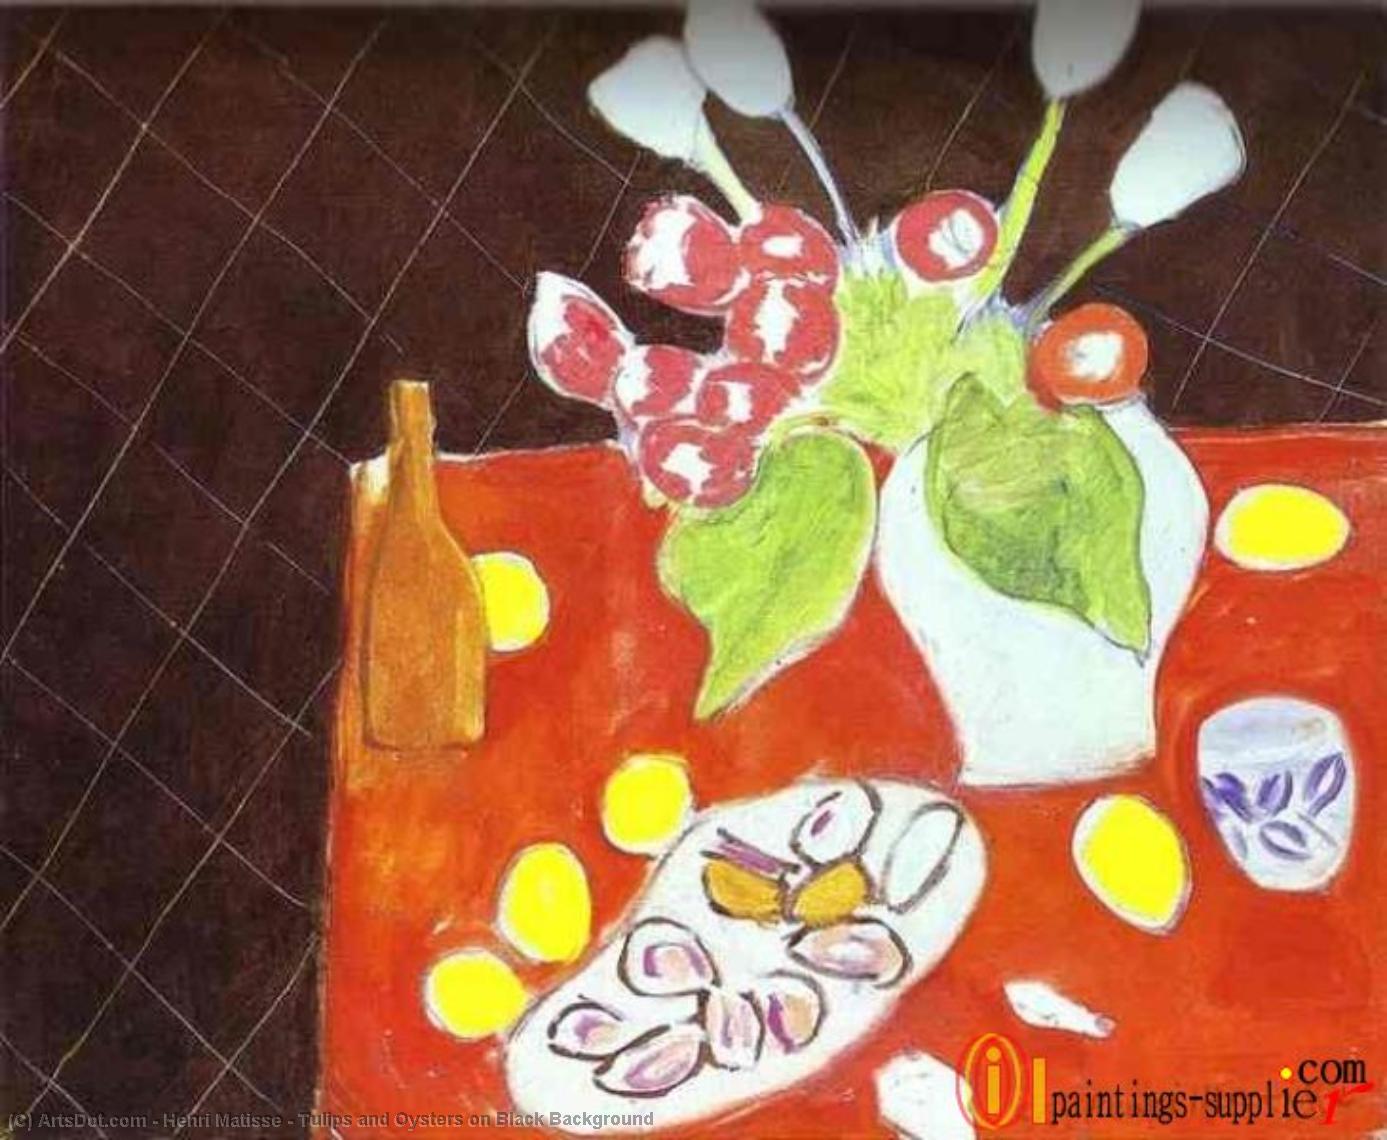 Wikoo.org - موسوعة الفنون الجميلة - اللوحة، العمل الفني Henri Matisse - Tulips and Oysters on Black Background